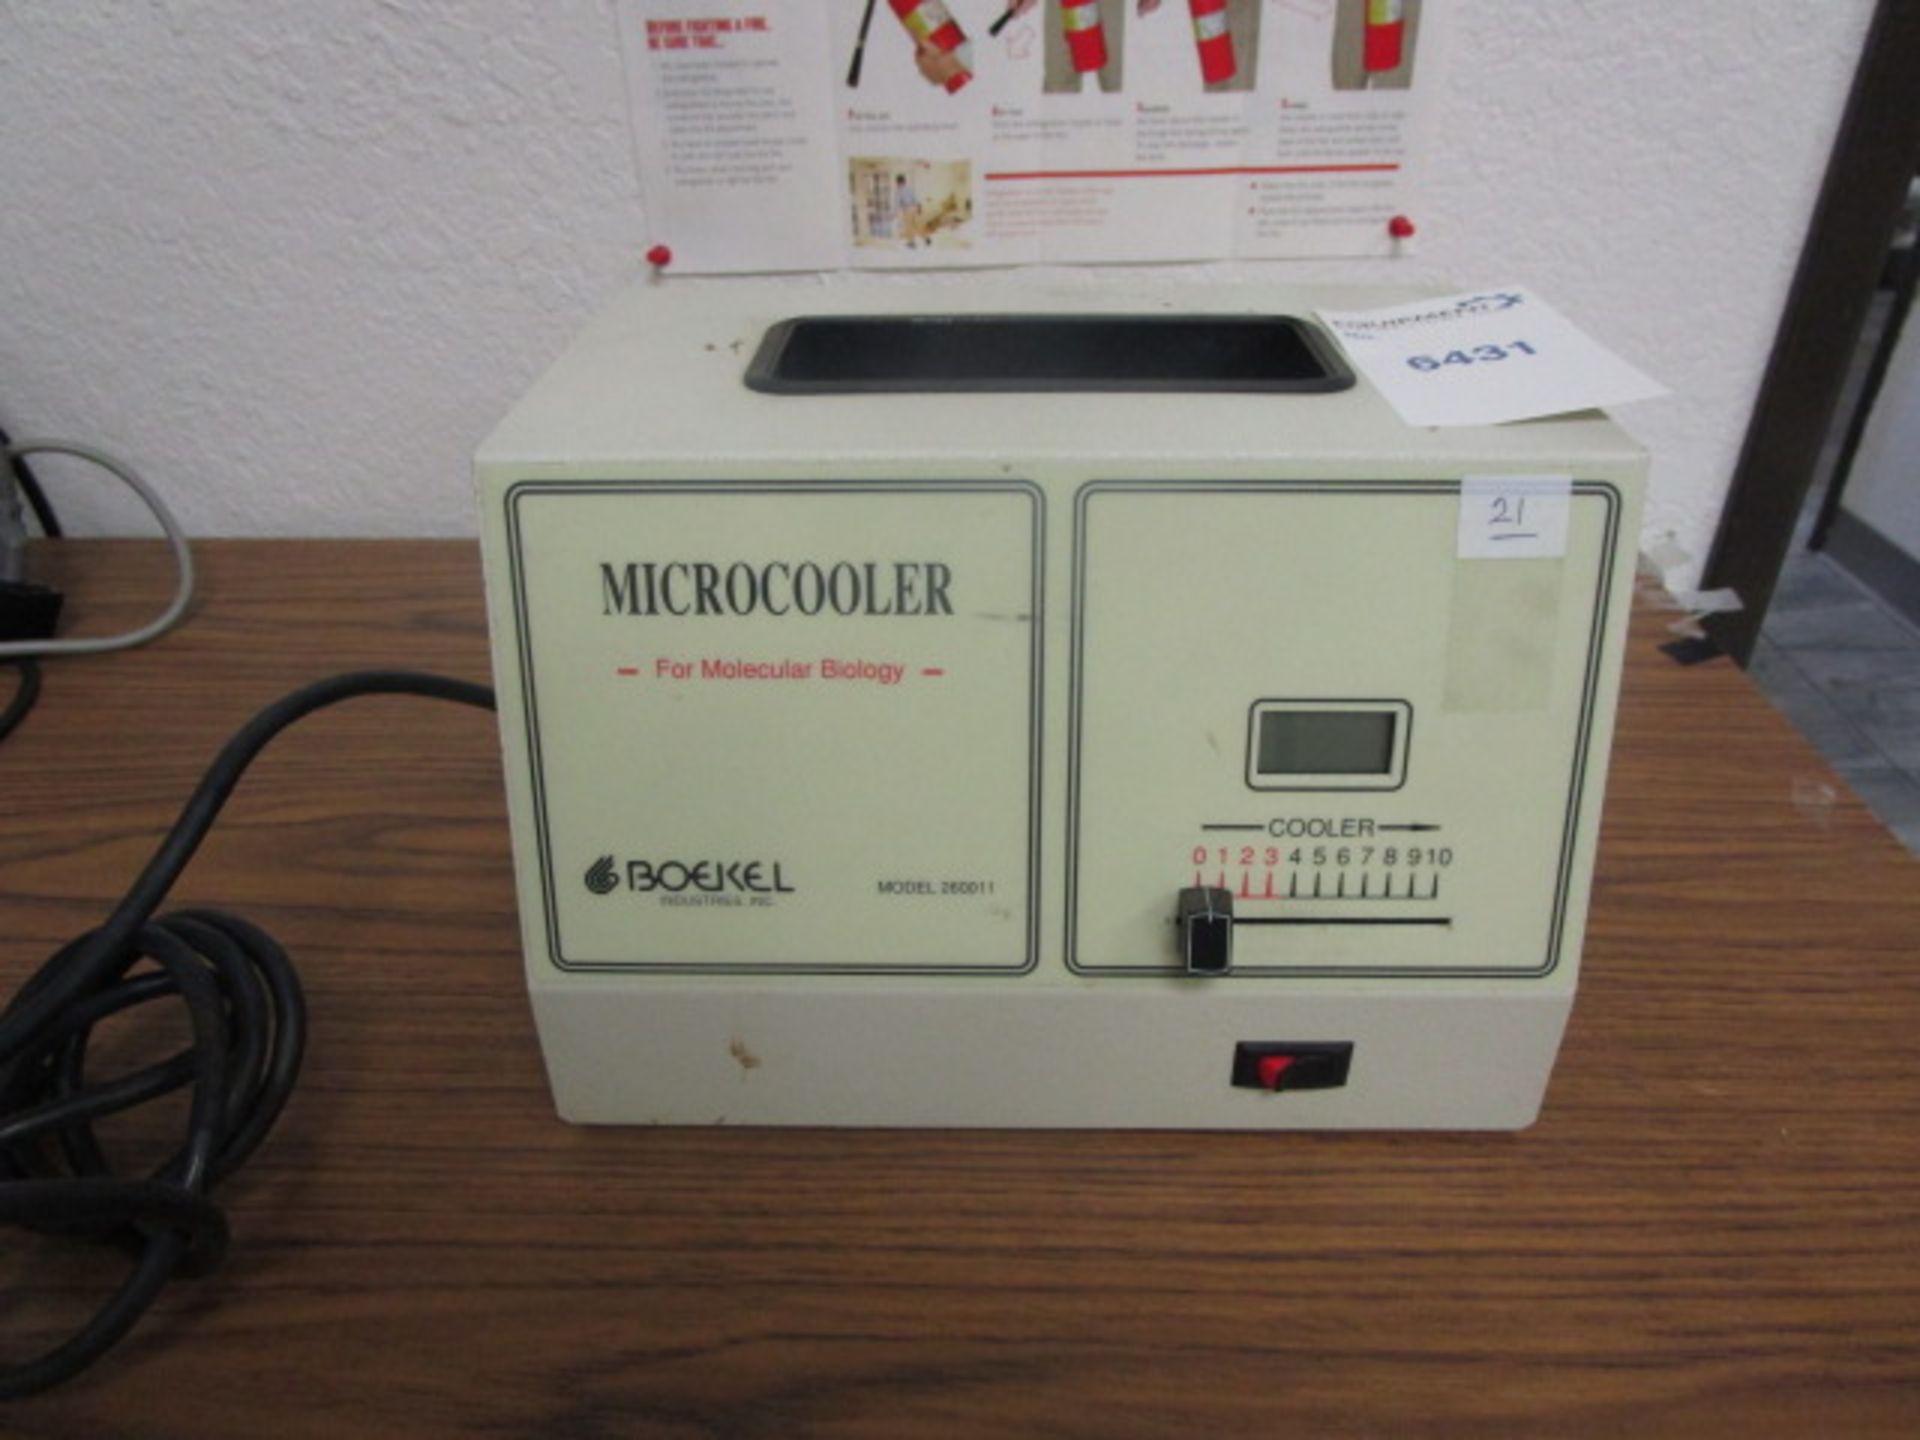 Boekel microcooler 260011 for molecular biology